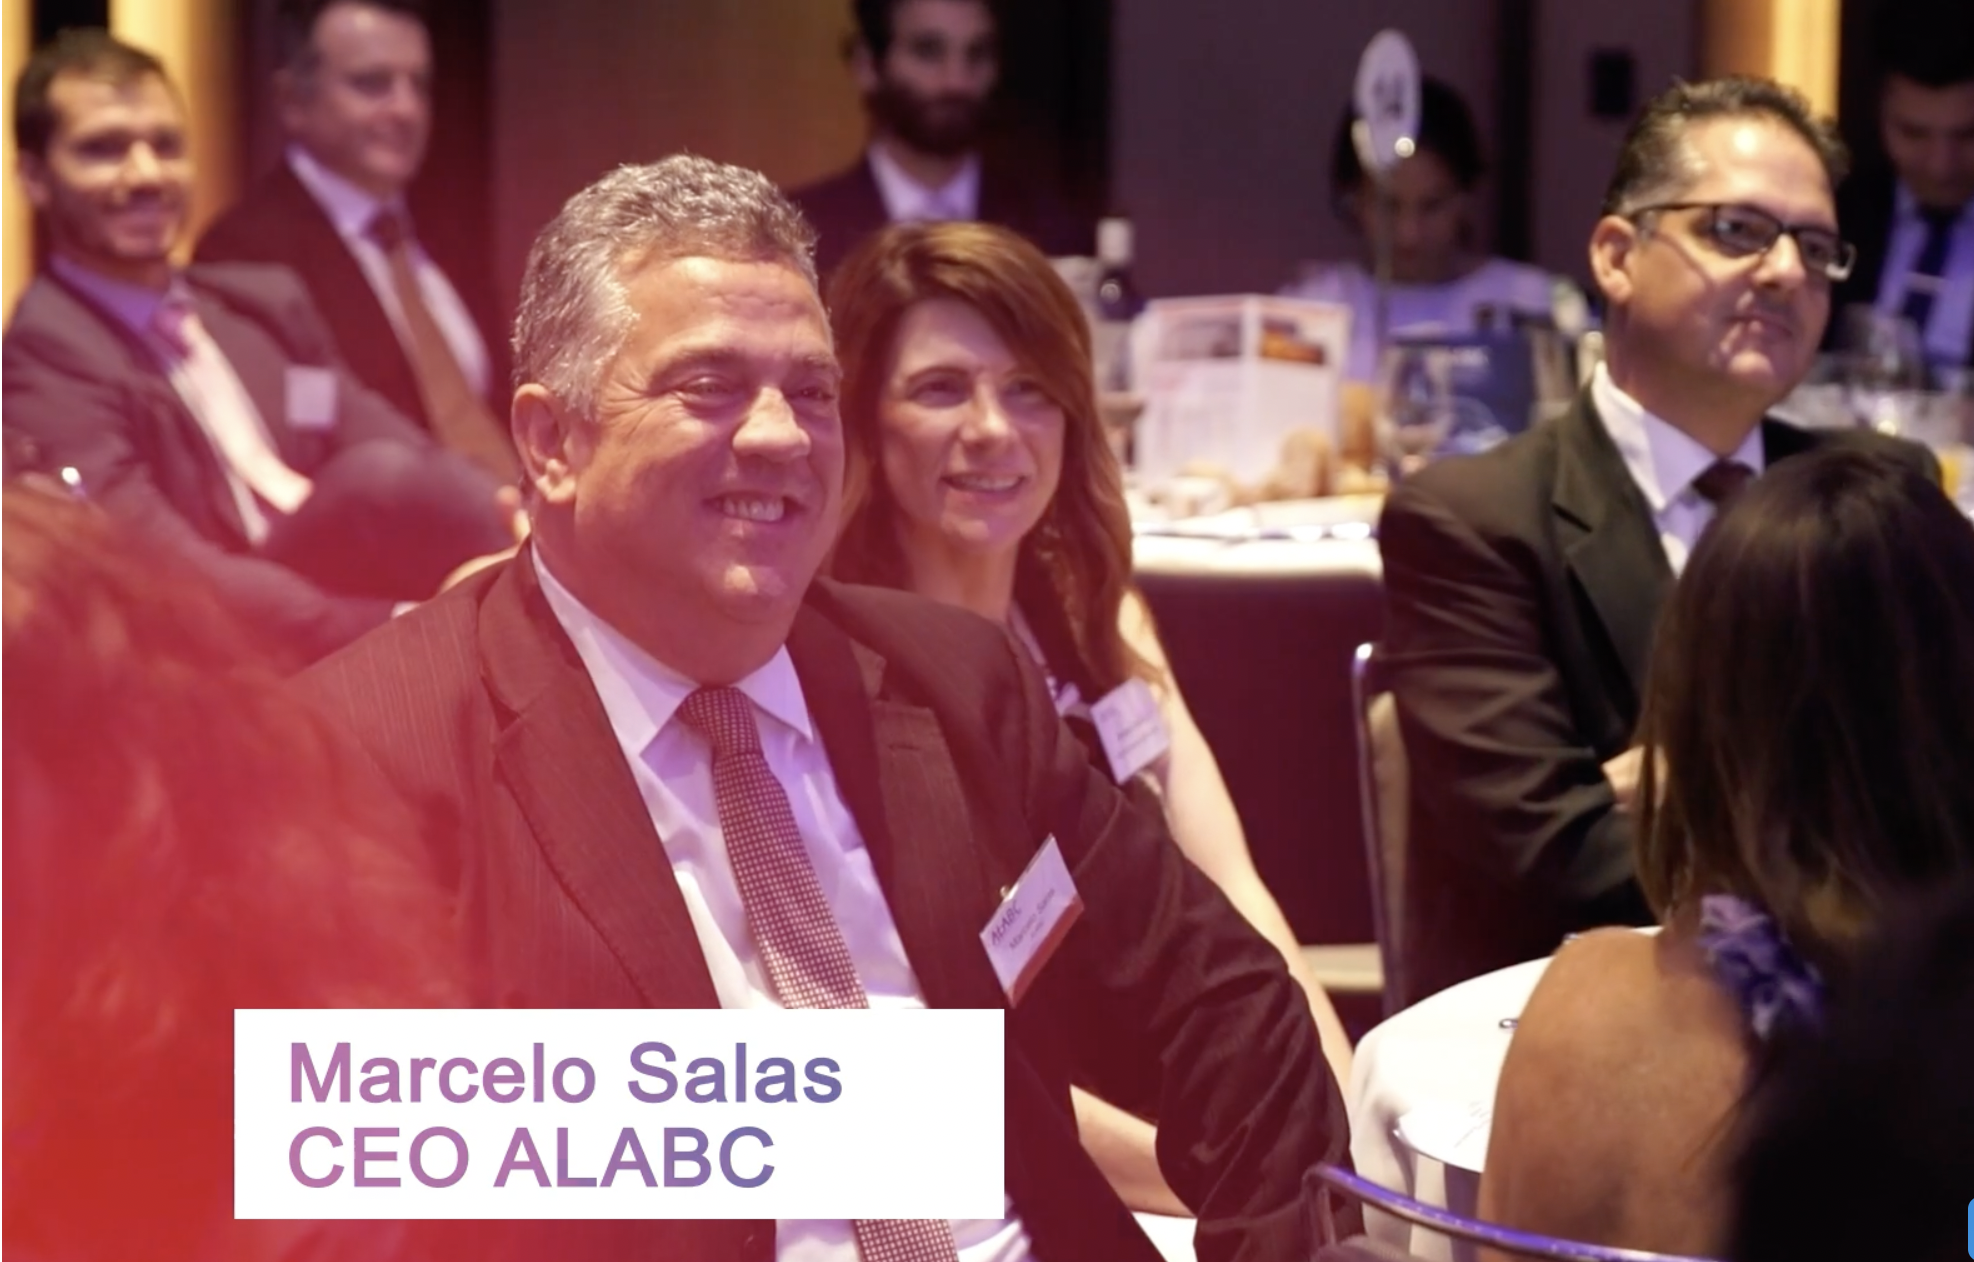 Marcelo Salas CEO ALABC